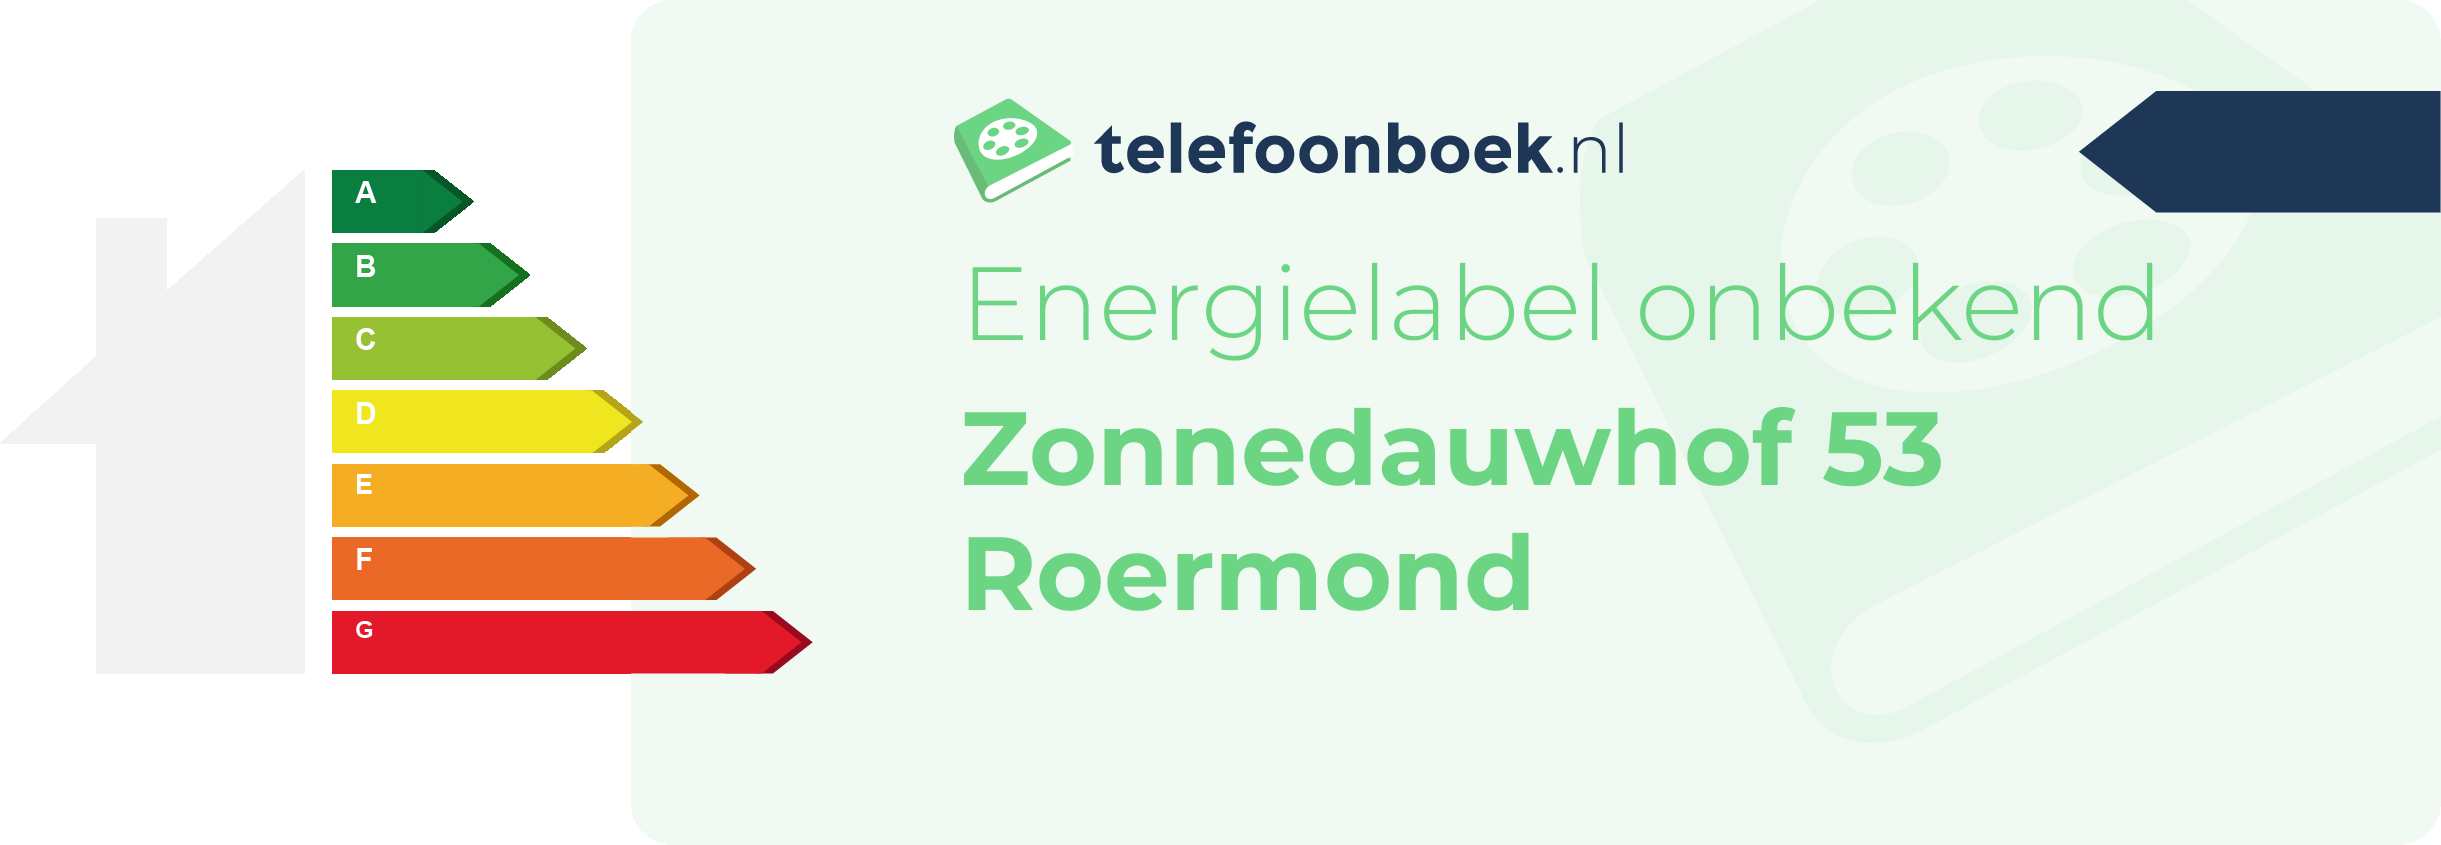 Energielabel Zonnedauwhof 53 Roermond